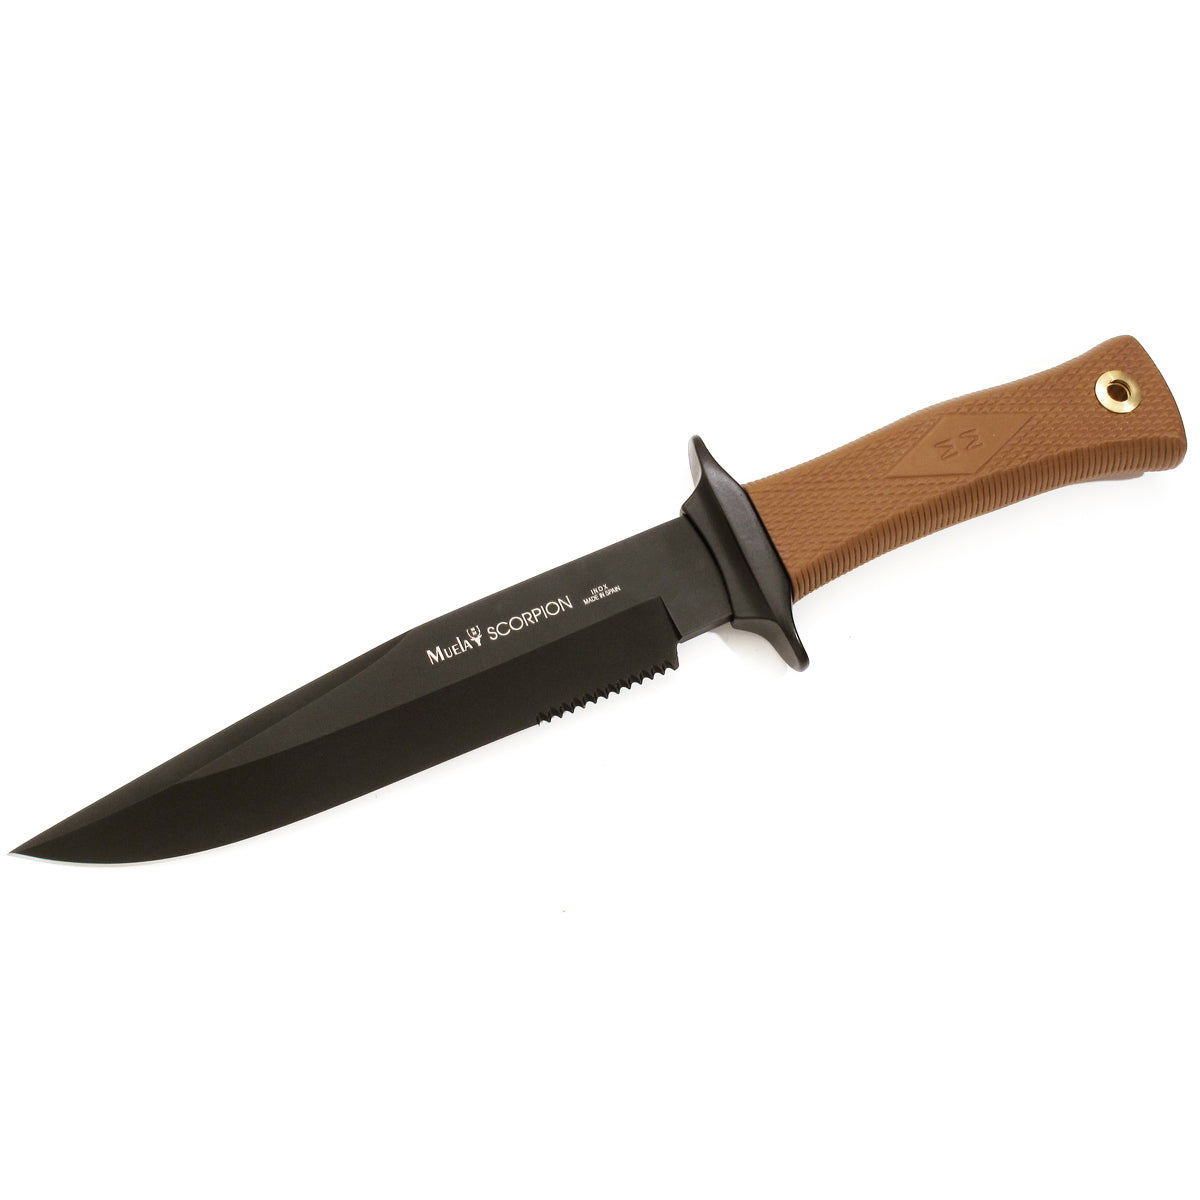 Muela | Scorpion Knife - 18NM - Tefloned Blade w/ Desert Sheath